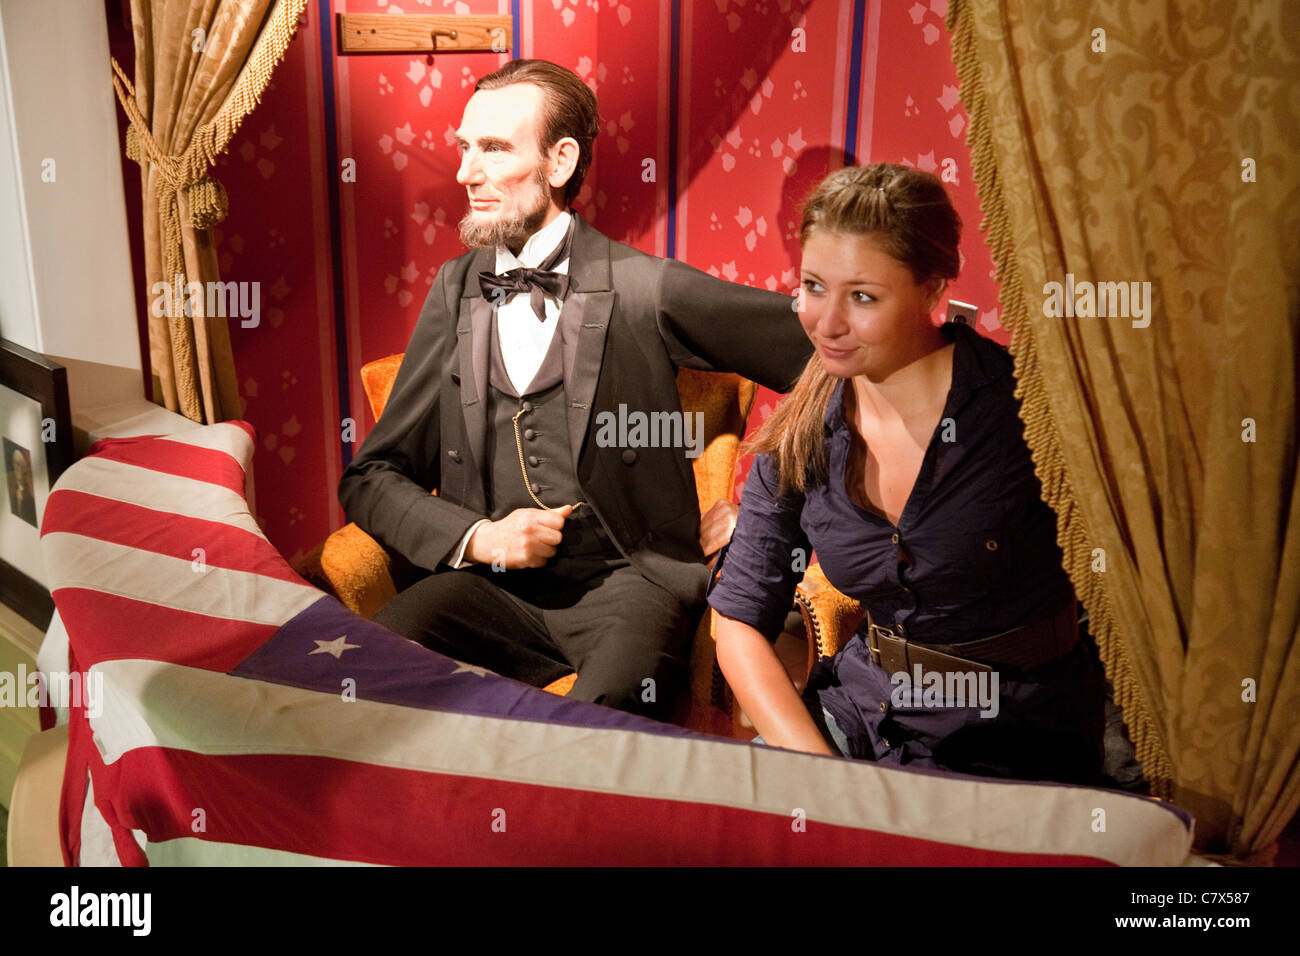 A Tourist posing with President Abraham Lincoln at Madame Tussauds waxworks, Washington DC USA Stock Photo